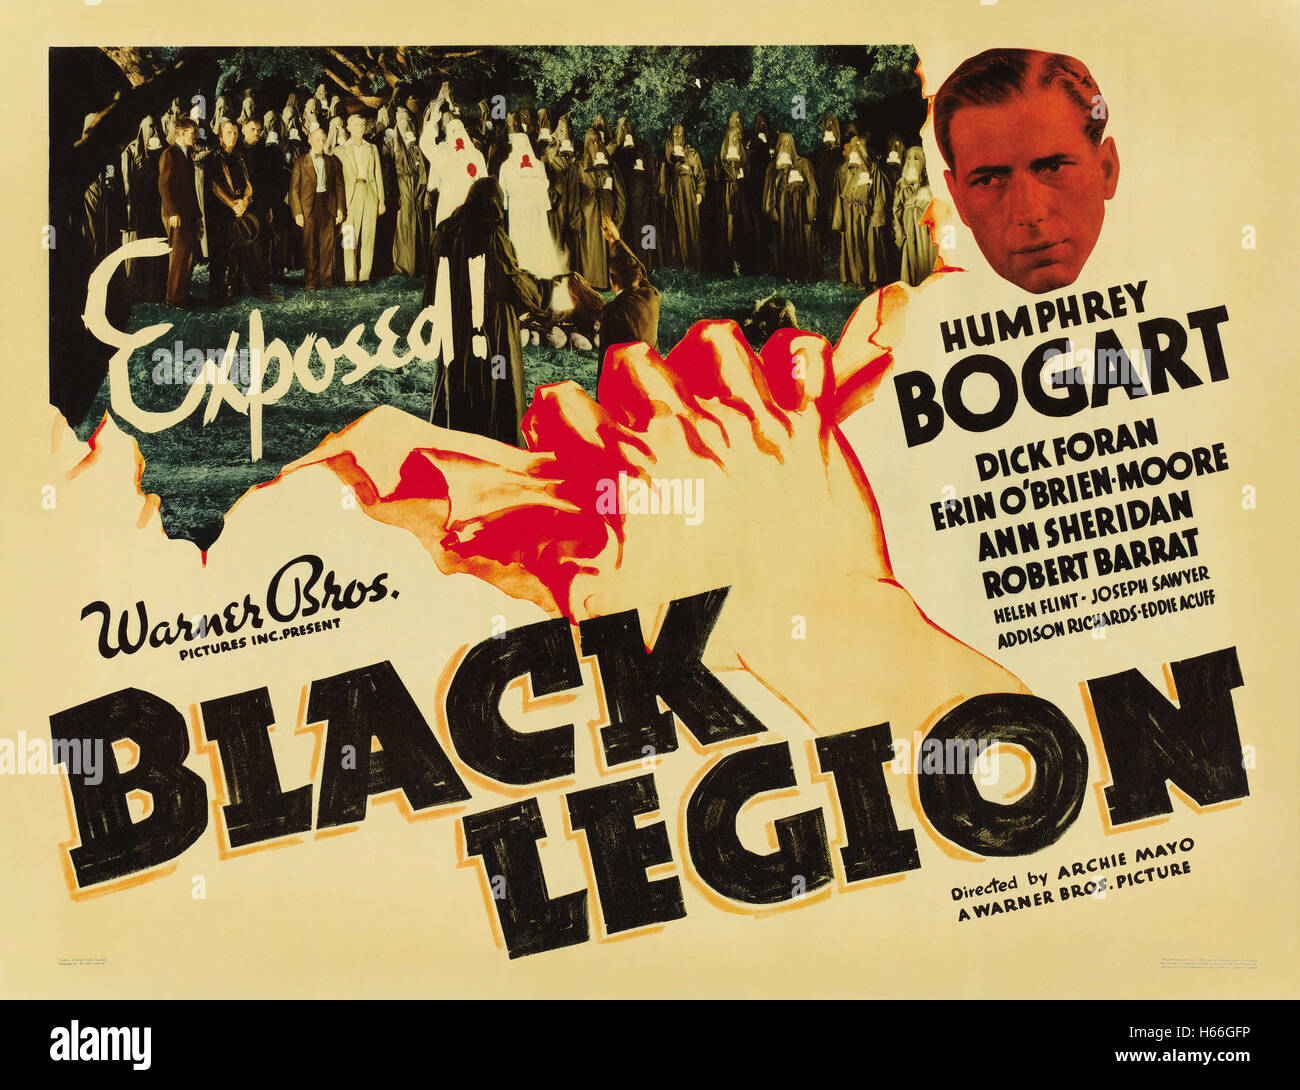 Black Legion - Movie Poster - Stock Photo